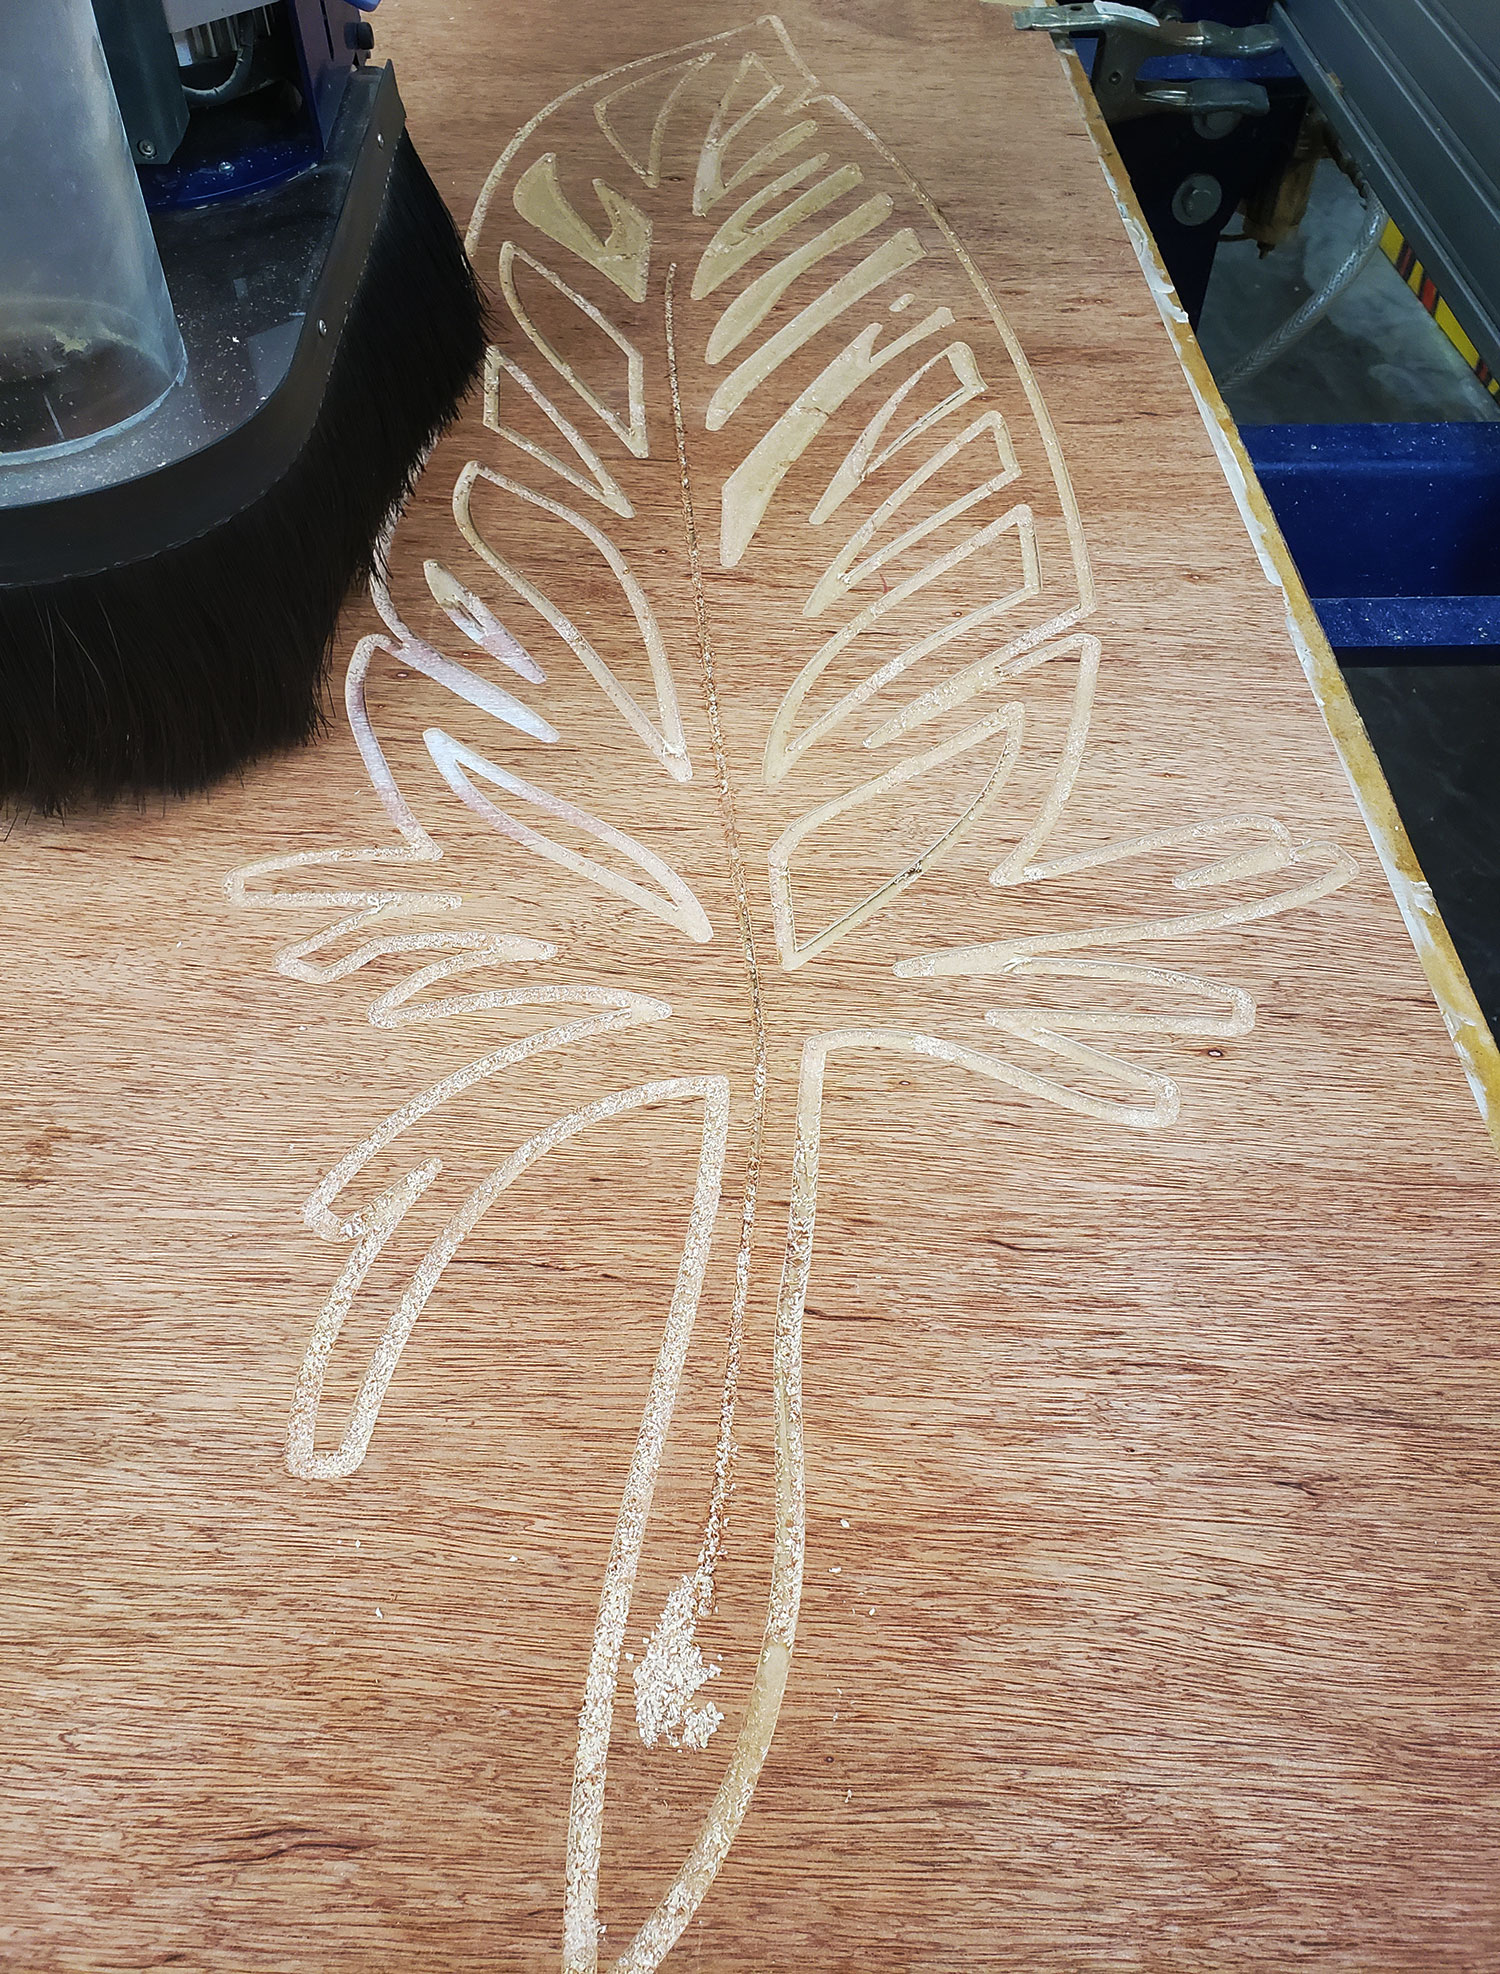 palm leaf cut out of wood on a cnc machine.